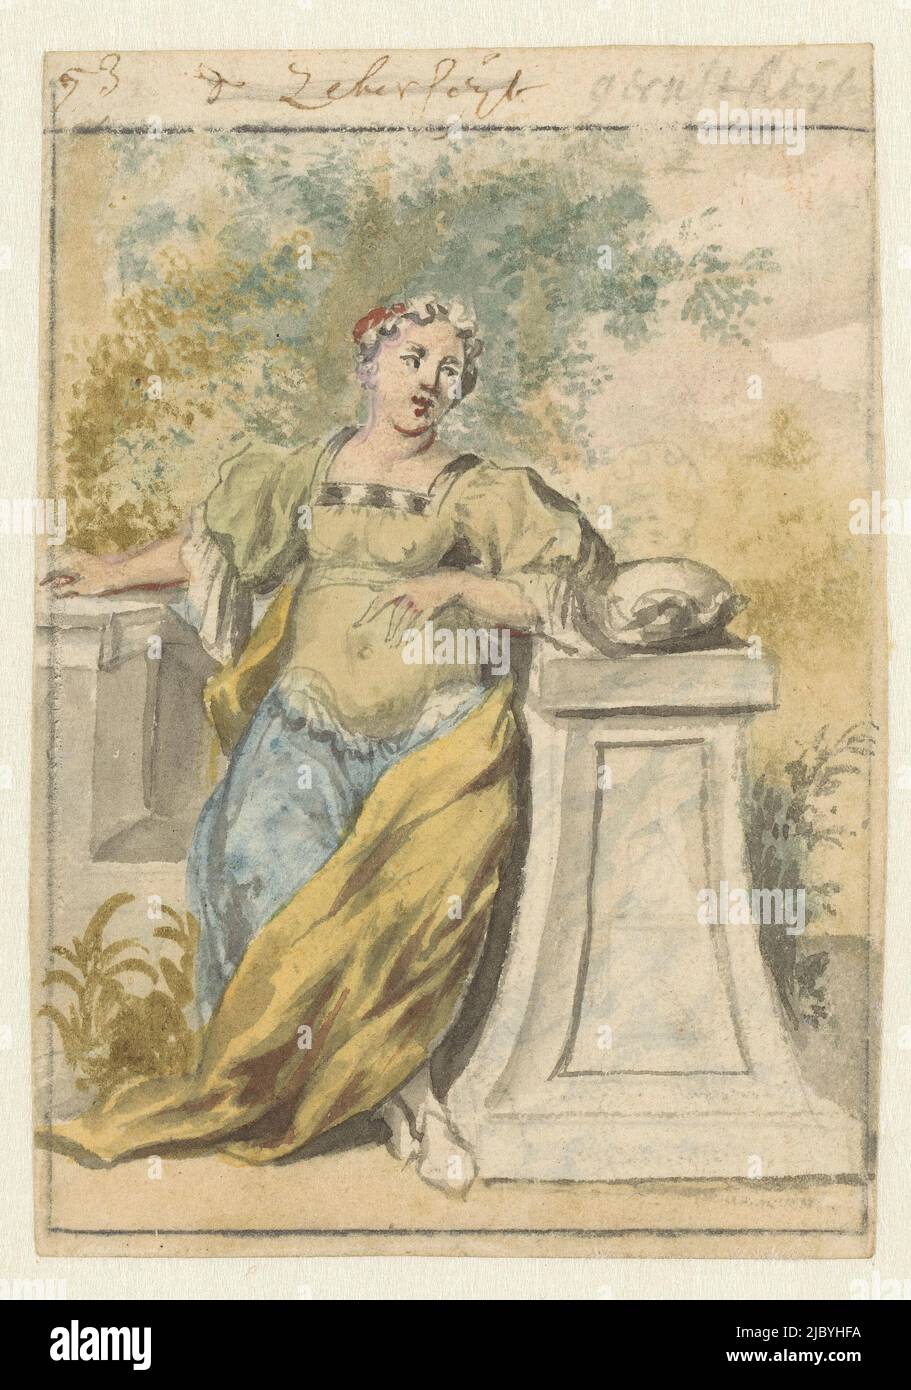 Certainty, Pieter van den Berge, 1675 - 1737, A woman, en face, seated on a marble bench., draughtsman: Pieter van den Berge, 1675 - 1737, paper, pen, brush, h 136 mm × w 95 mm Stock Photo